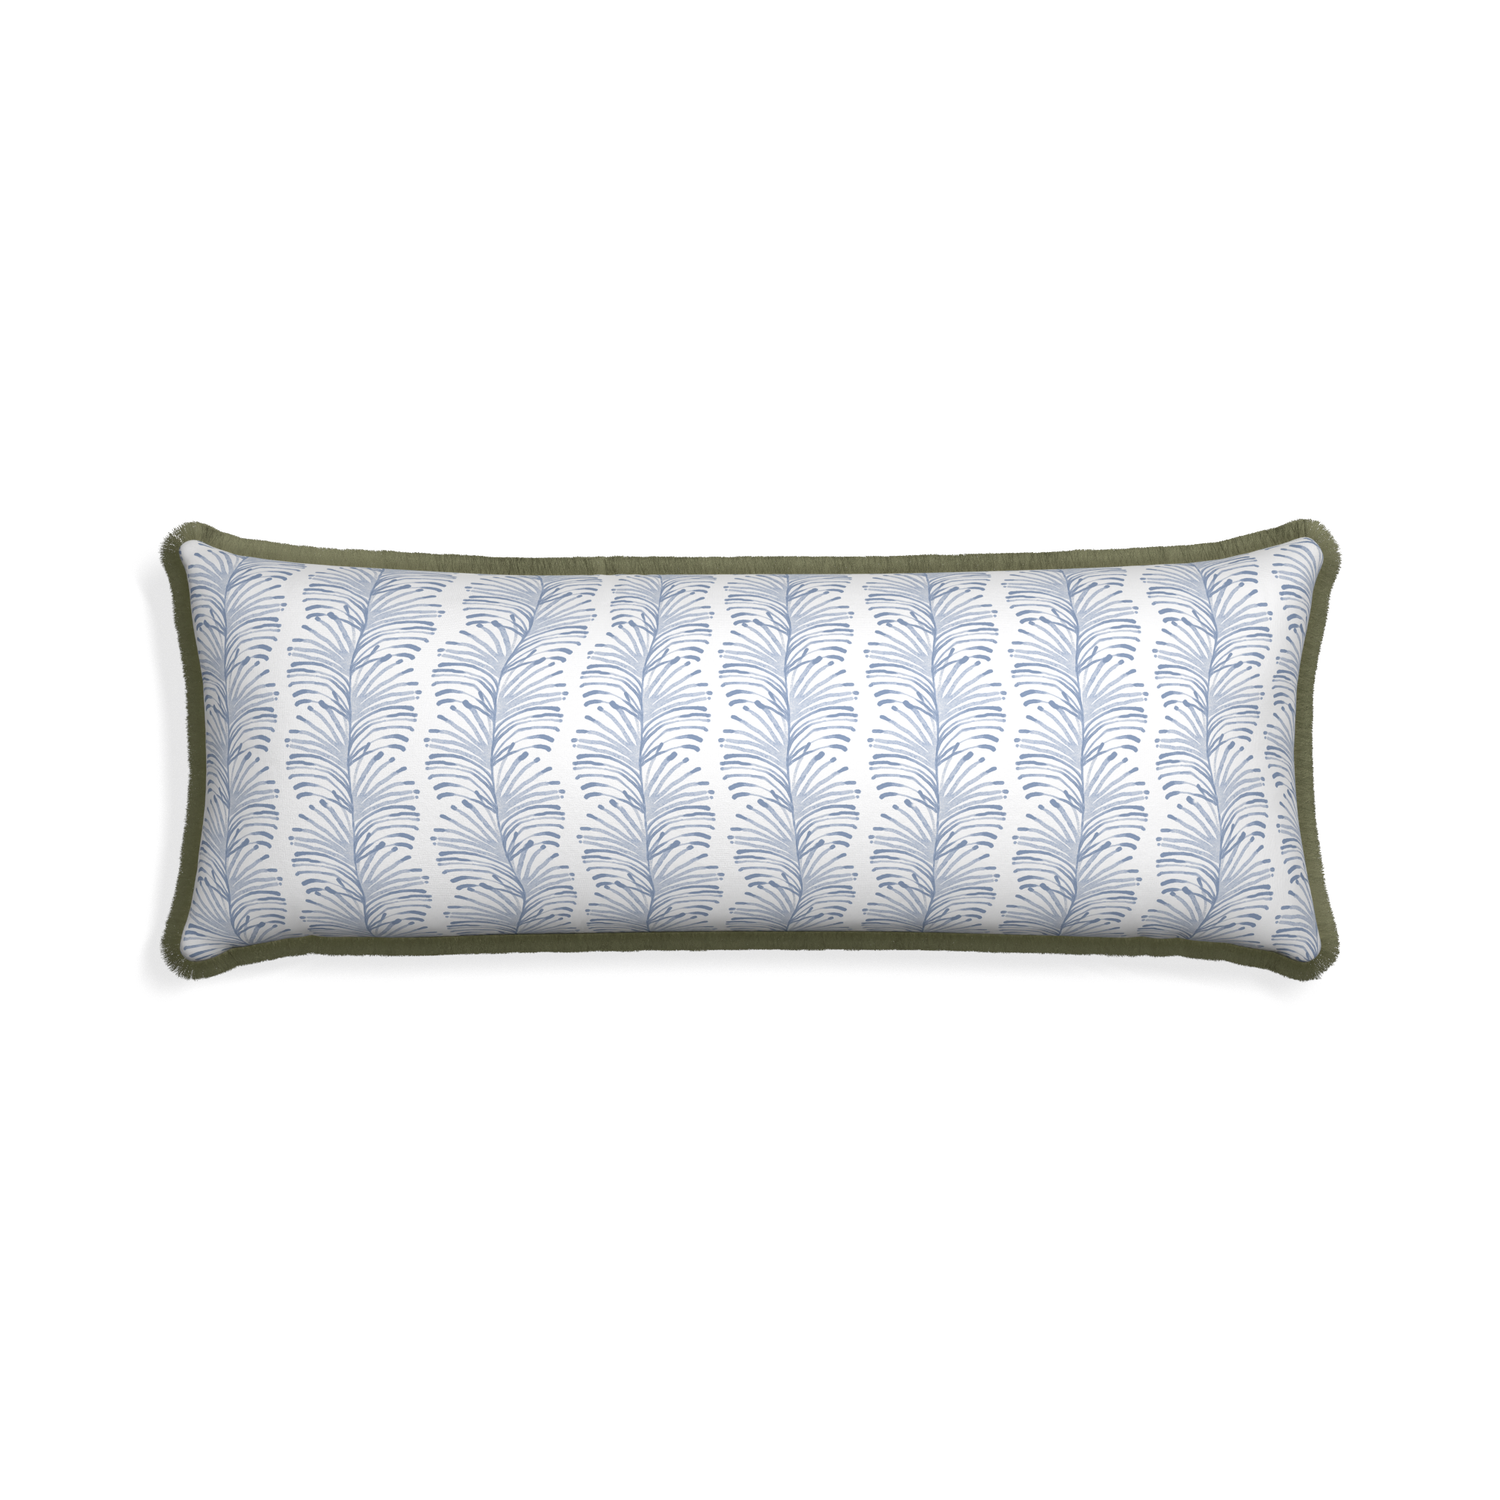 Xl-lumbar emma sky custom pillow with sage fringe on white background